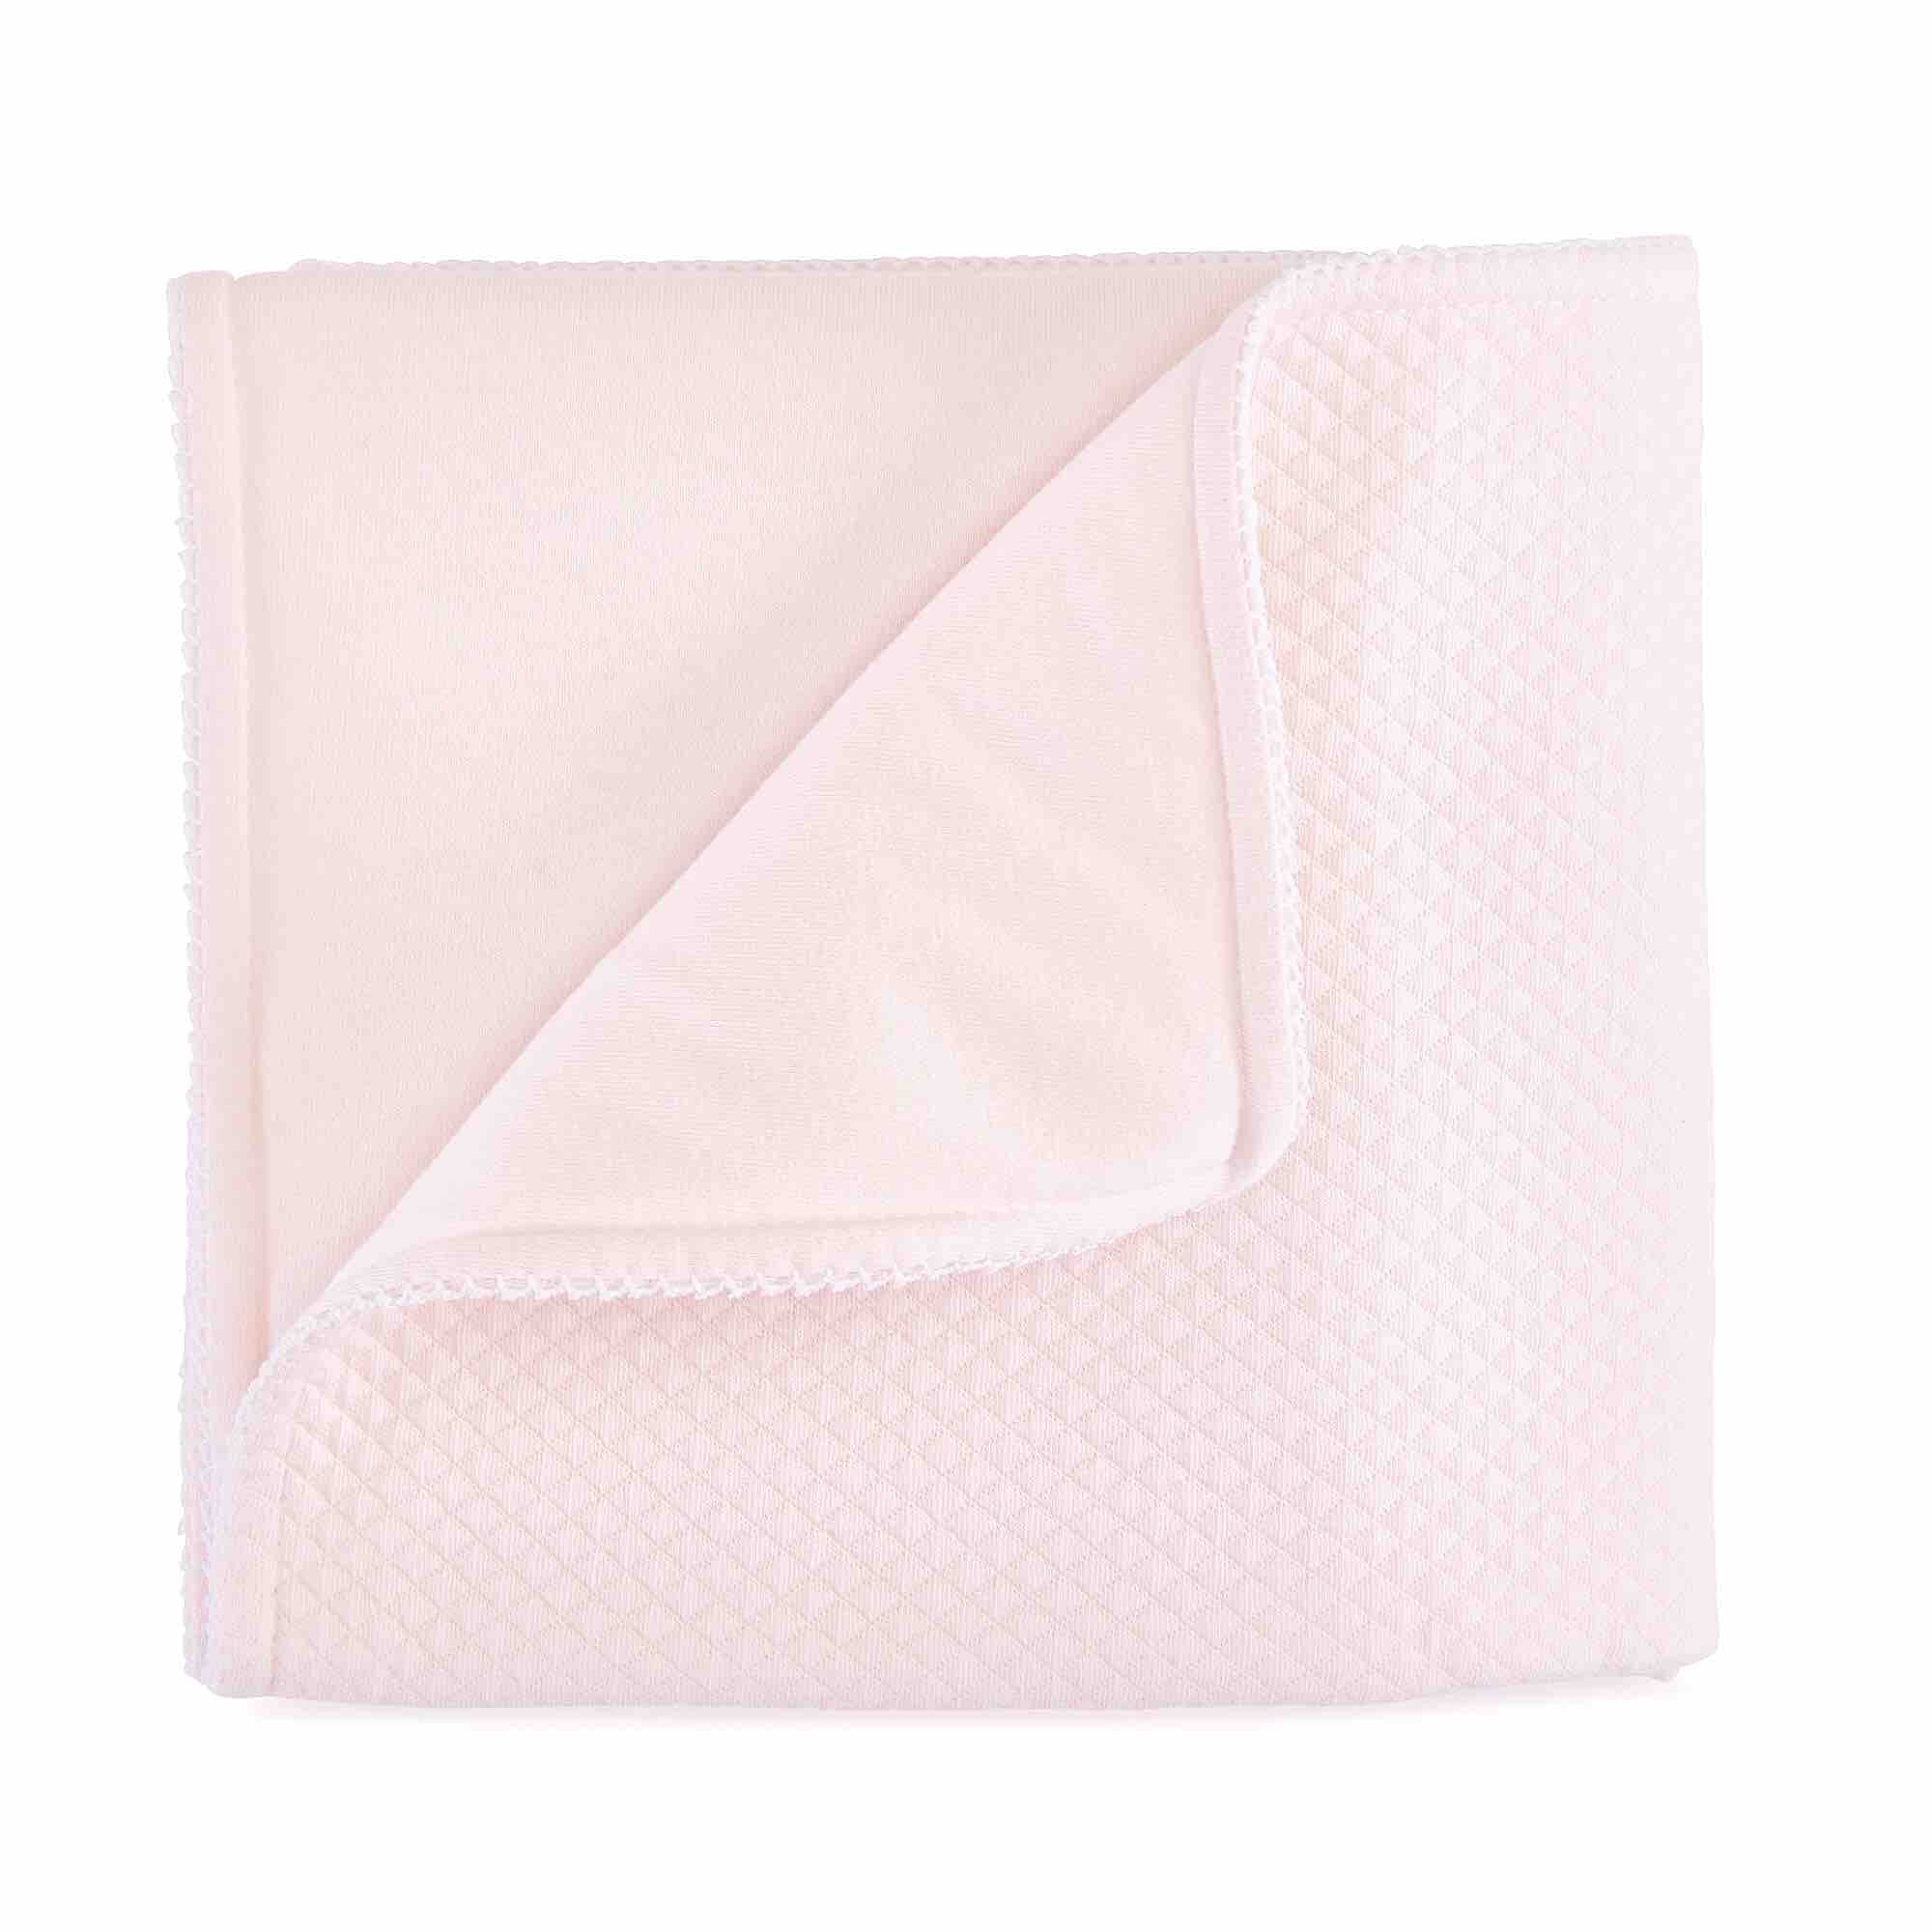 Theophile & Patachou Blanket - Royal Pink